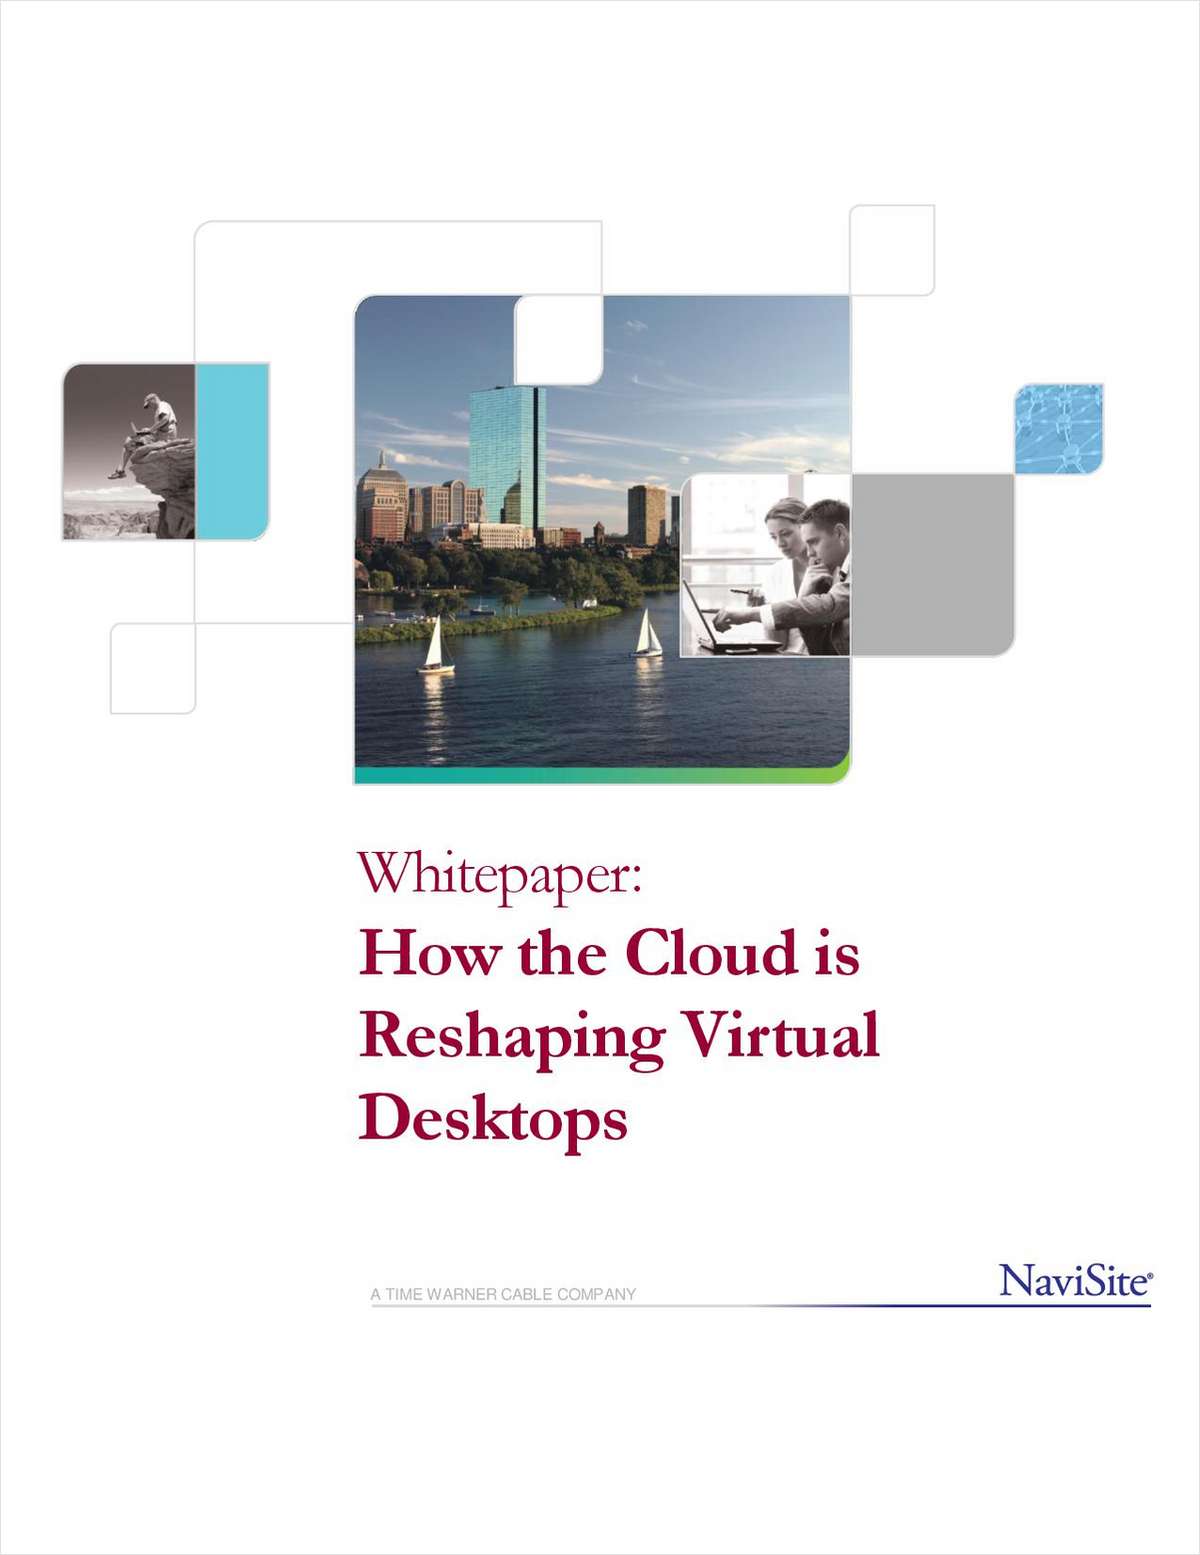 How the Cloud is Reshaping Virtual Desktops